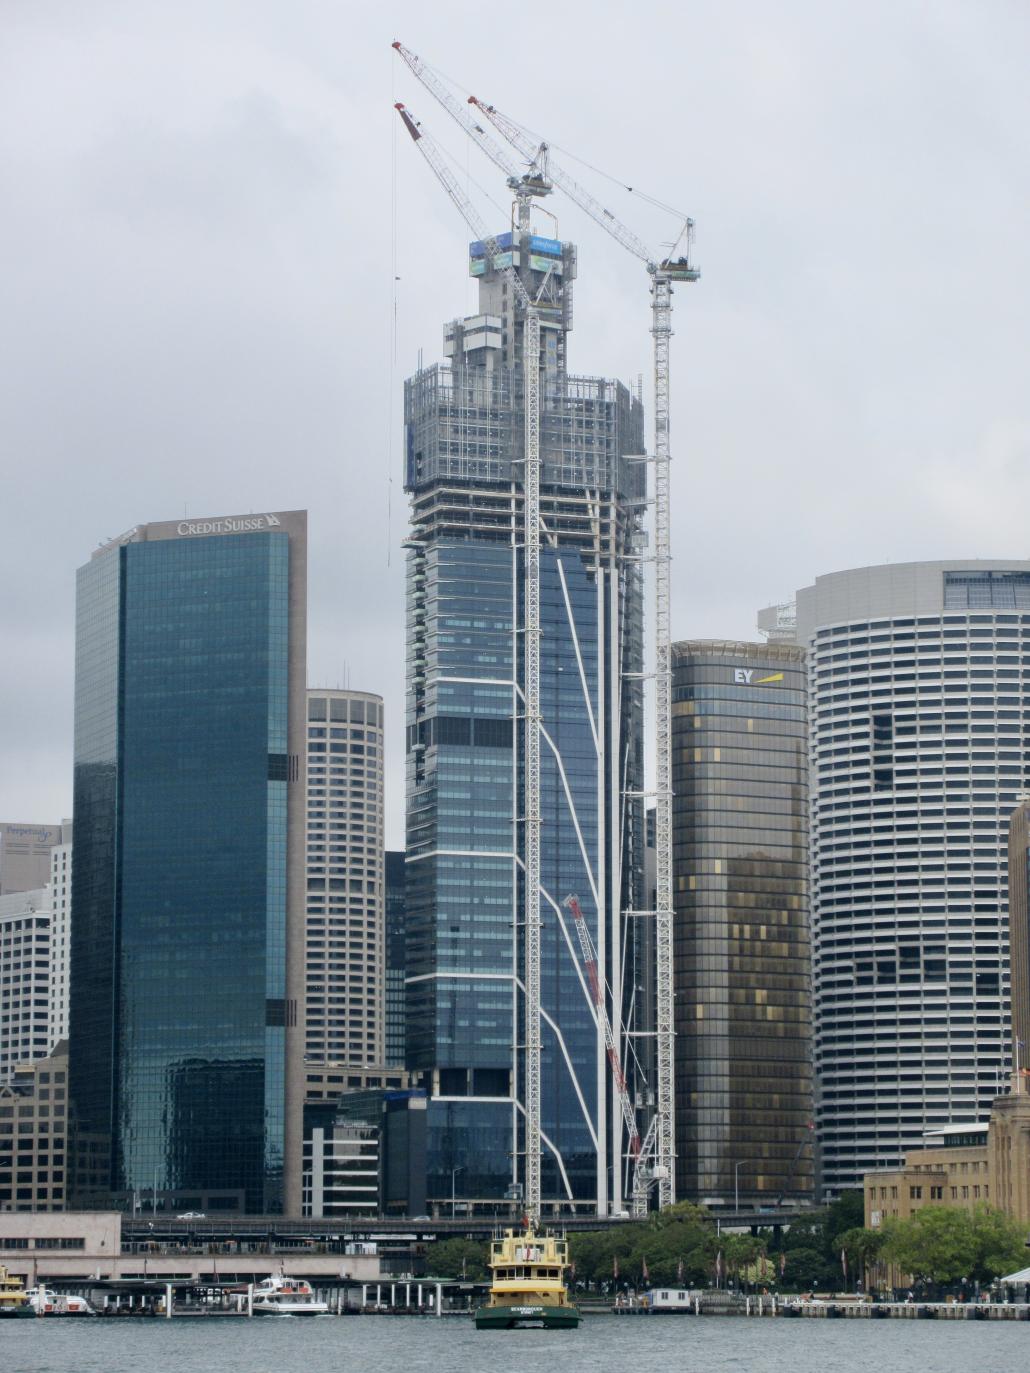 Construction at Circular Quay, Sydney